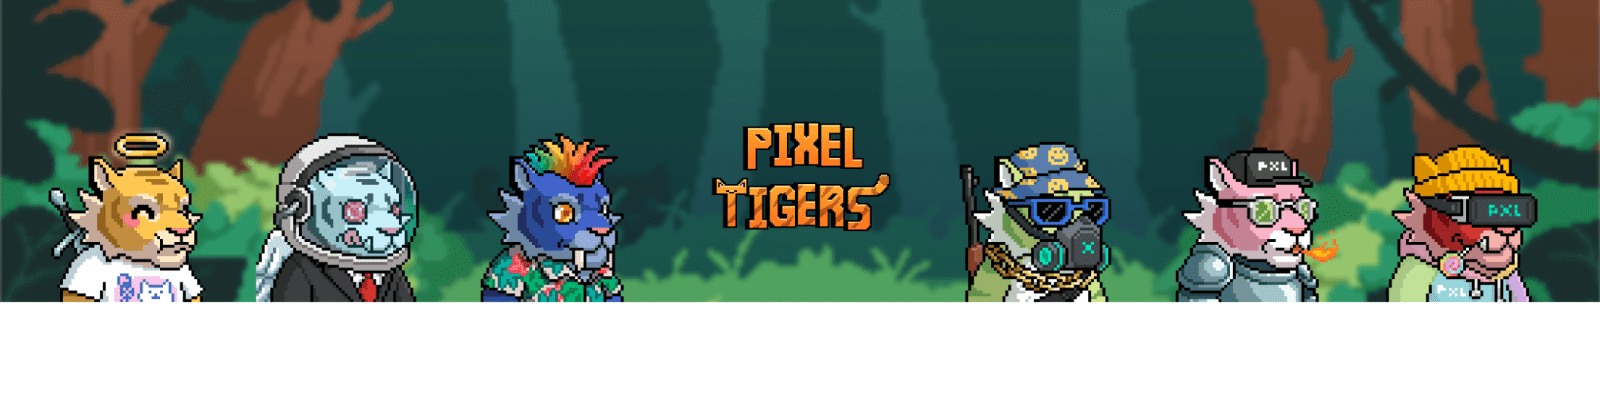 PixelTigers